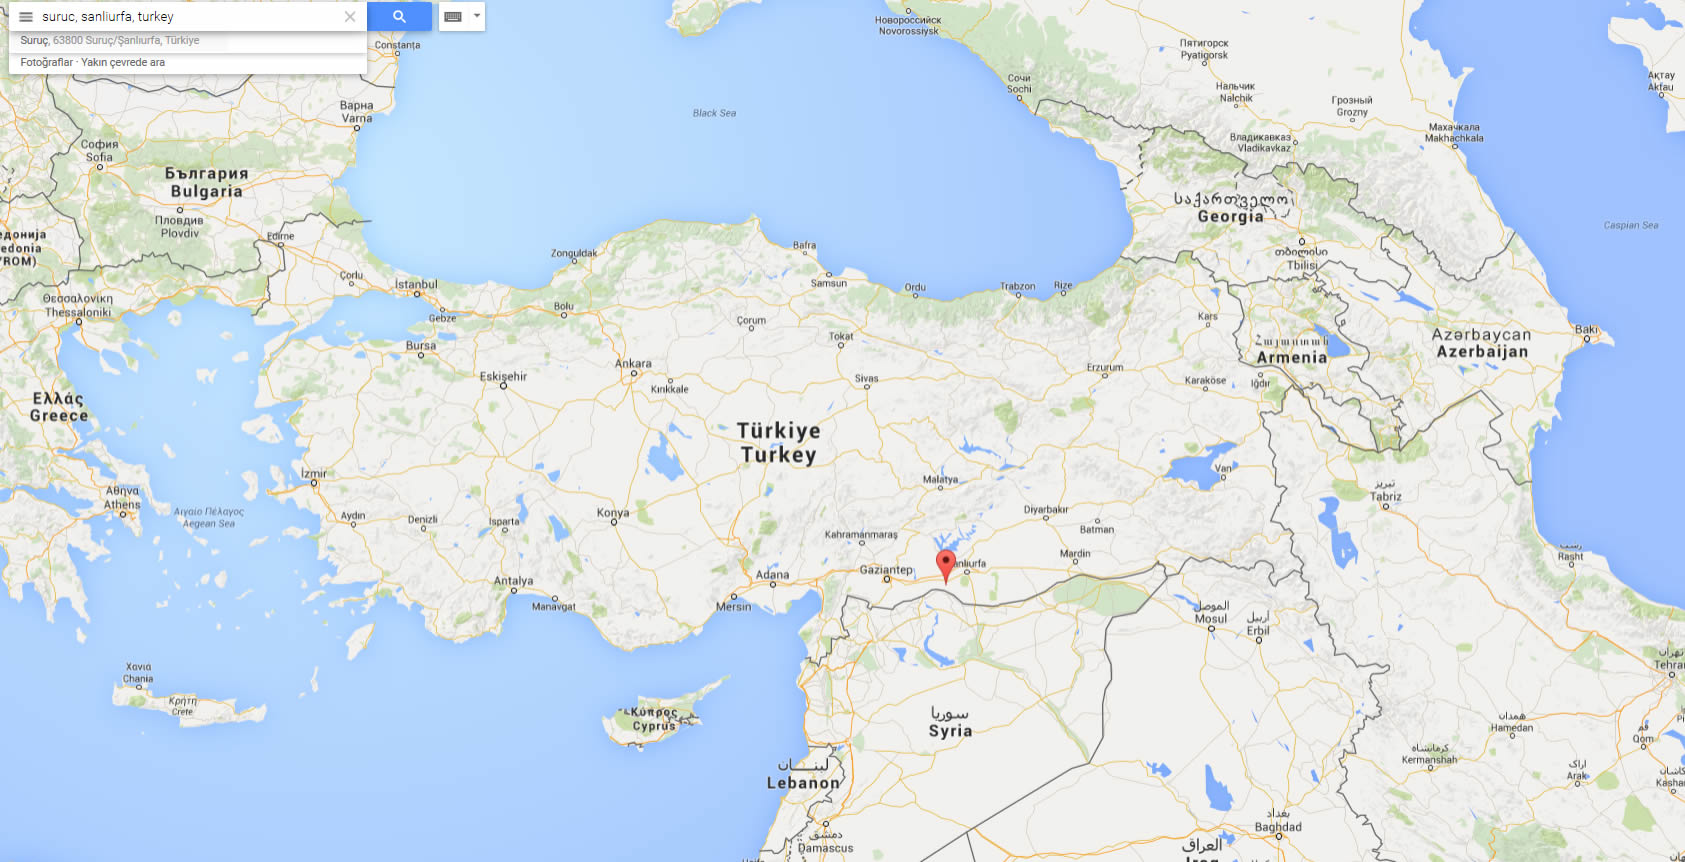 SSuruc Sanliurfa turkei Map